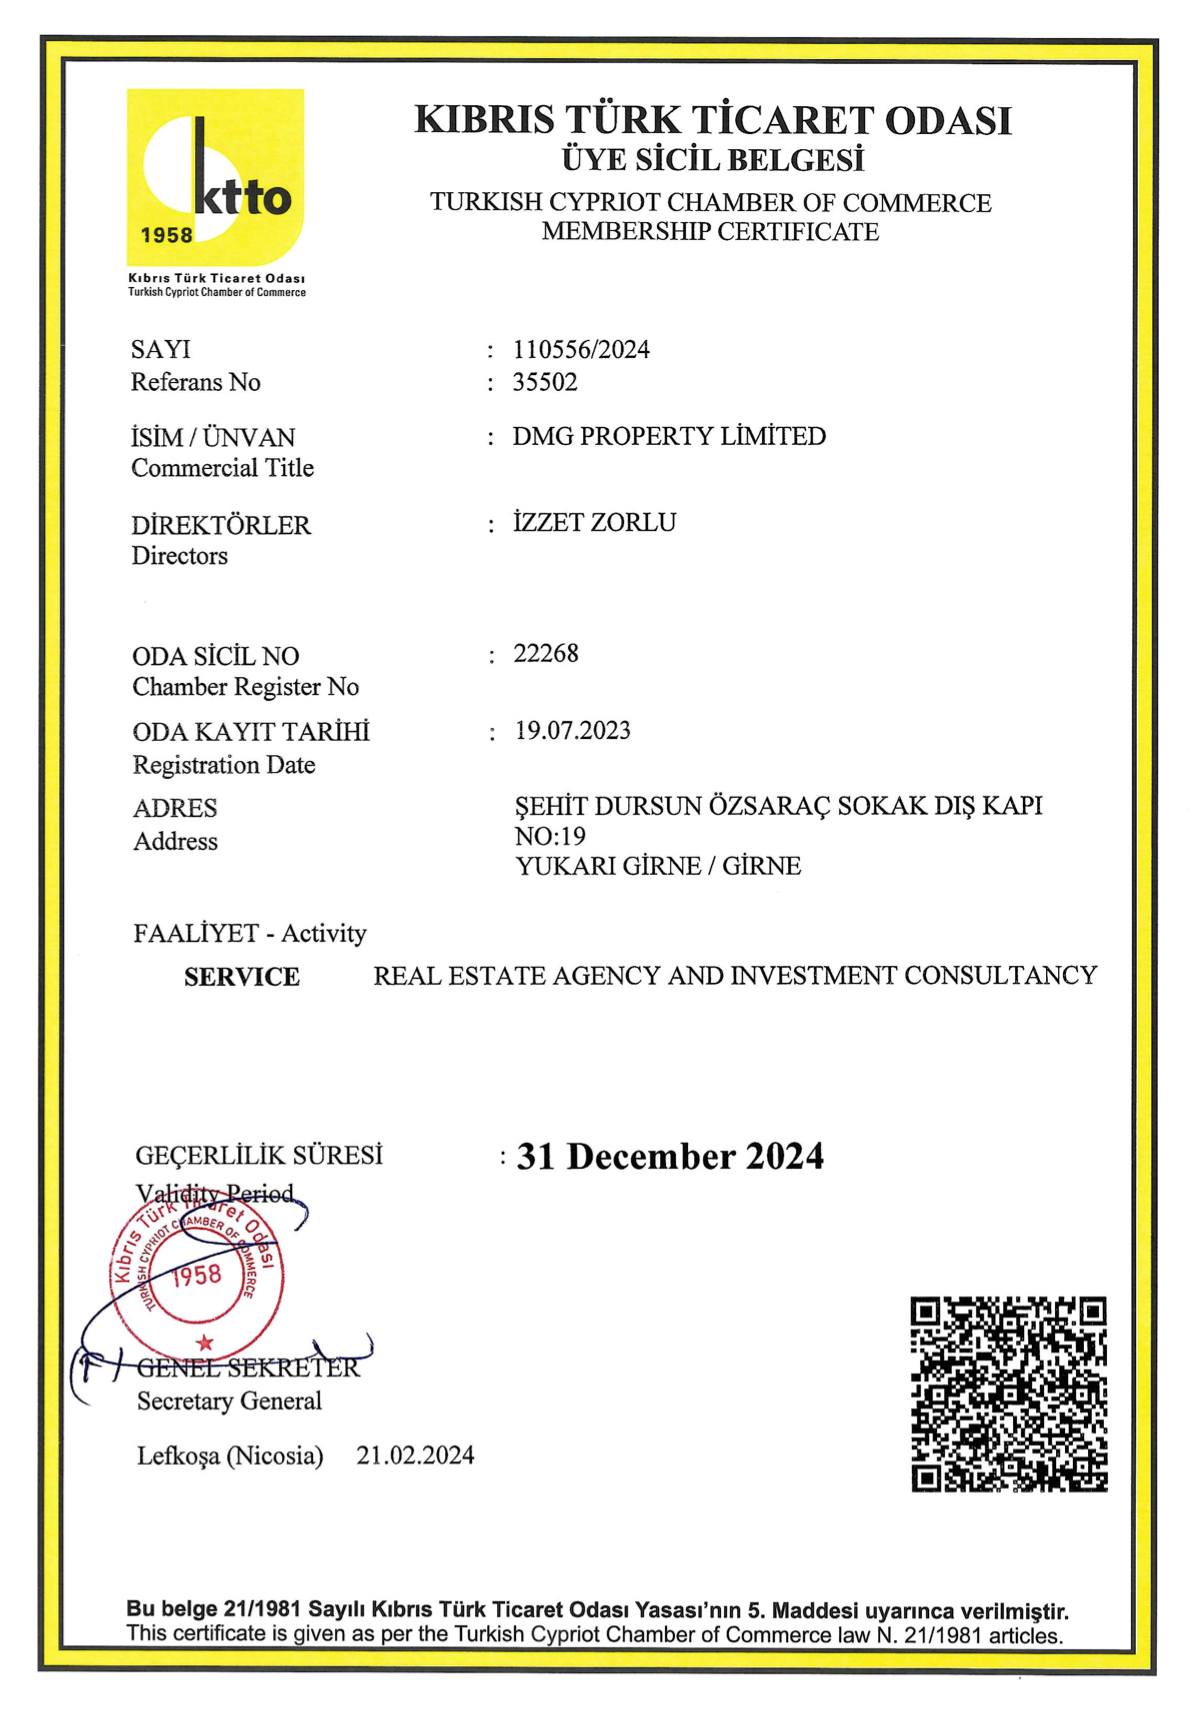 Chamber of Commerce Membership Certificate